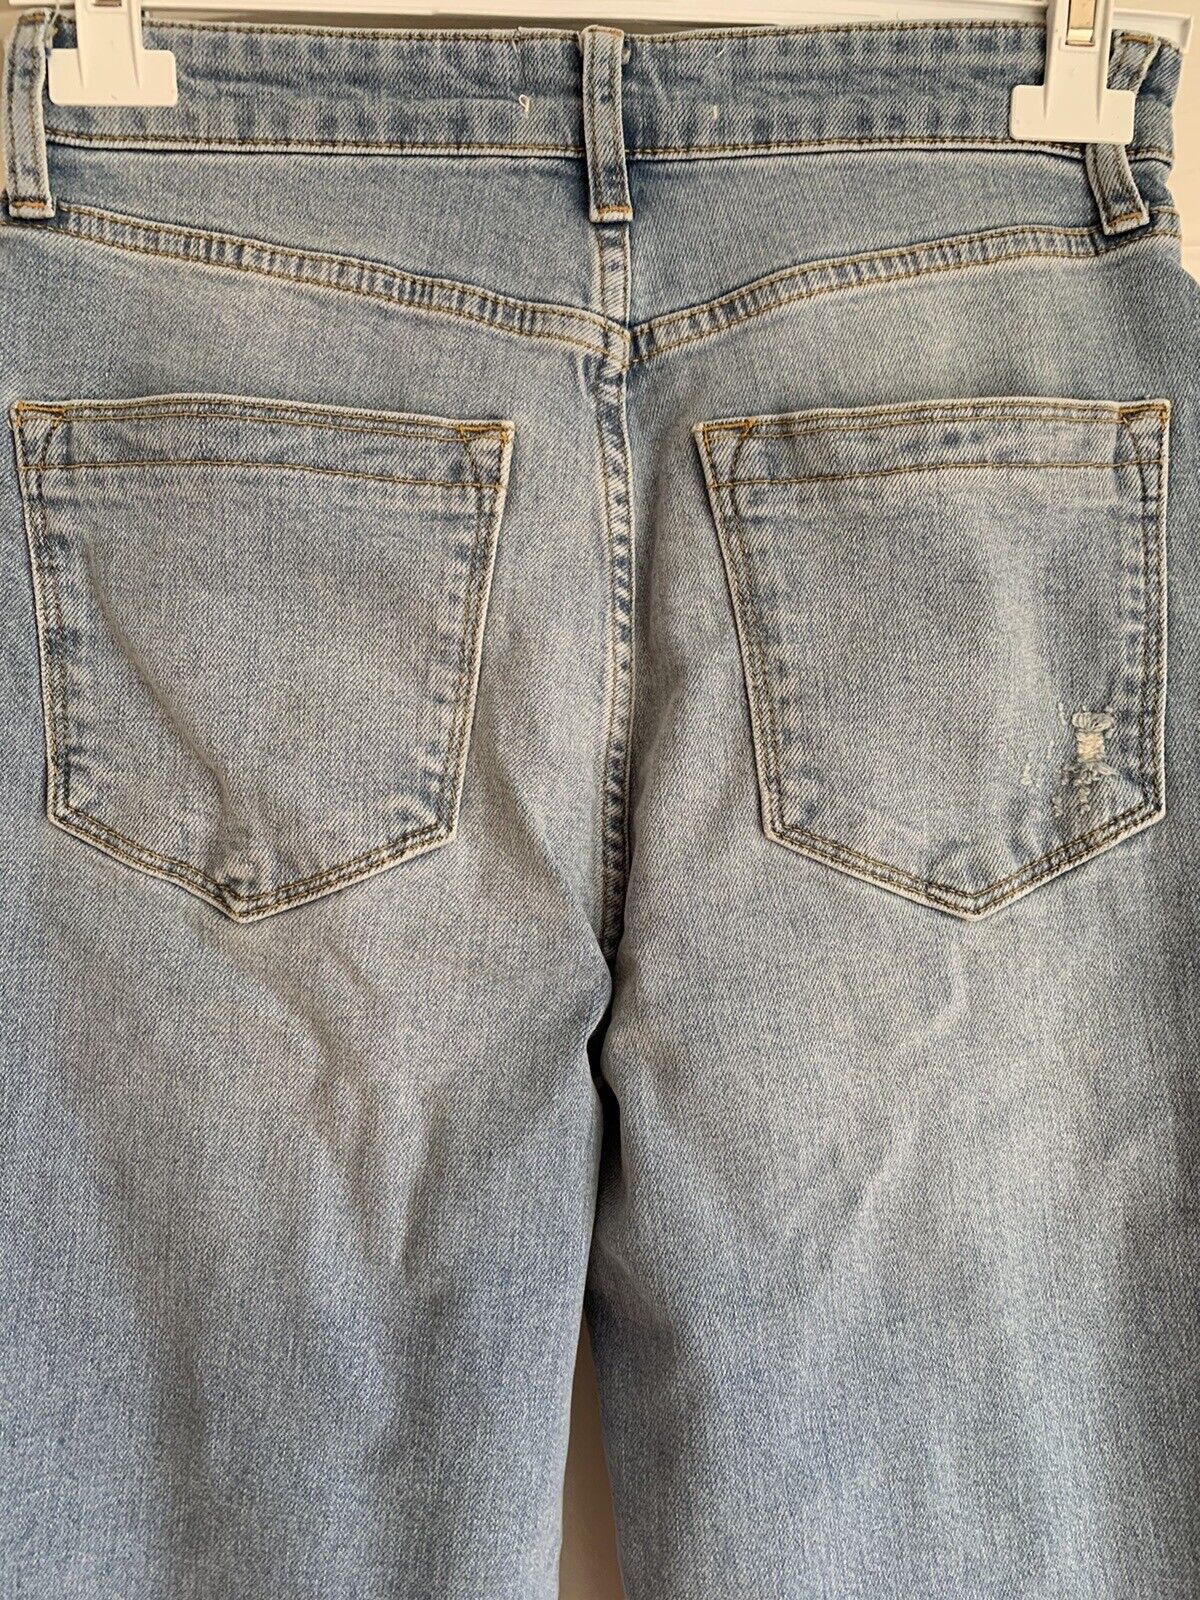 Ex Reiss High Waisted Slim Leg Distress Jeans Sizes 24-32 (UK 4-14) RRP £110